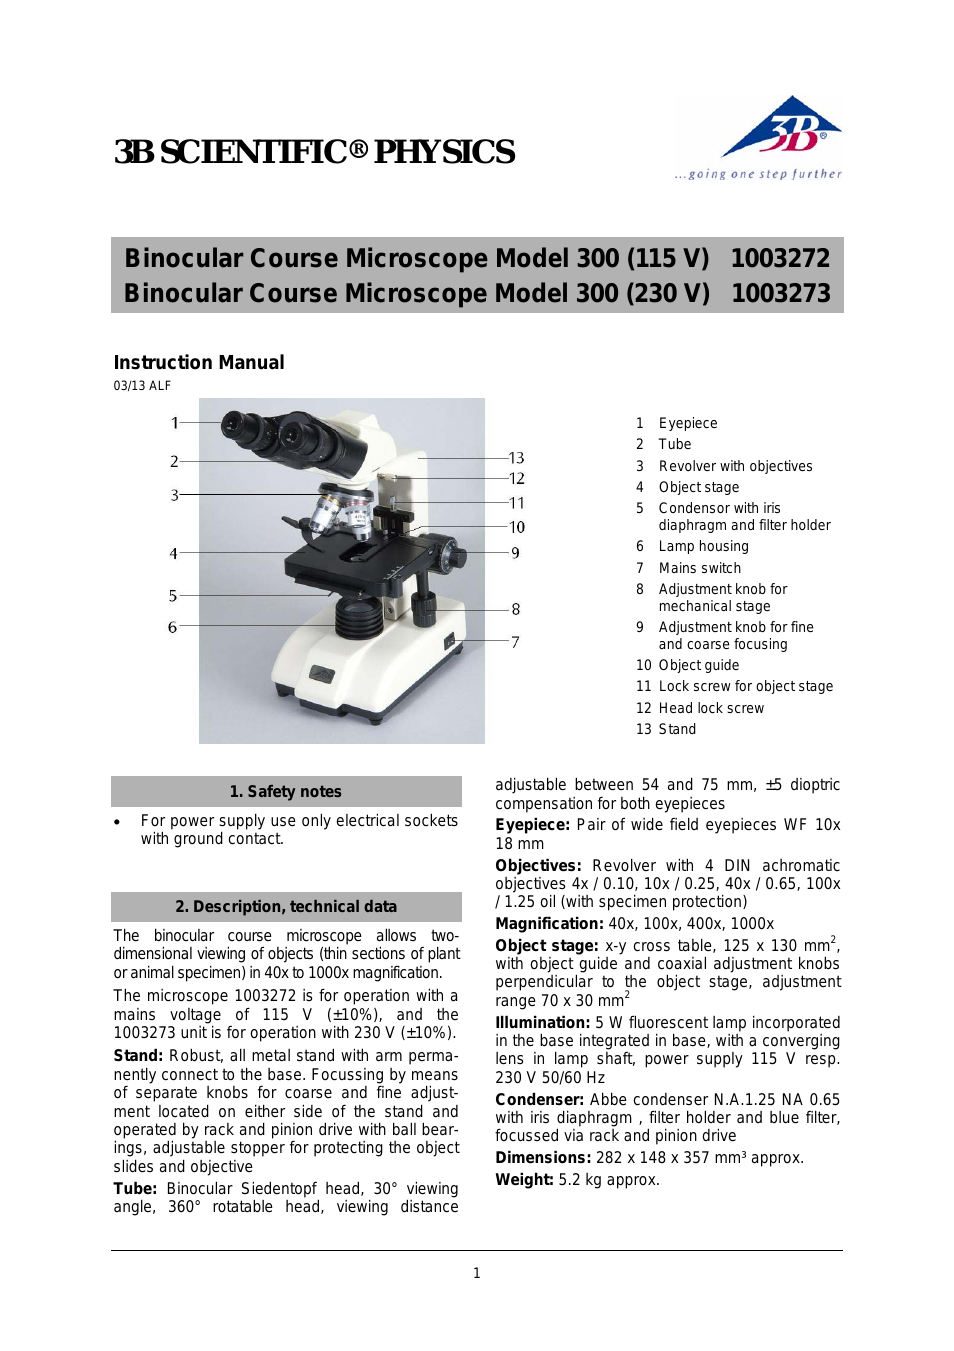 Binocular Course Microscope Model 300 (230 V, 50__60 Hz)